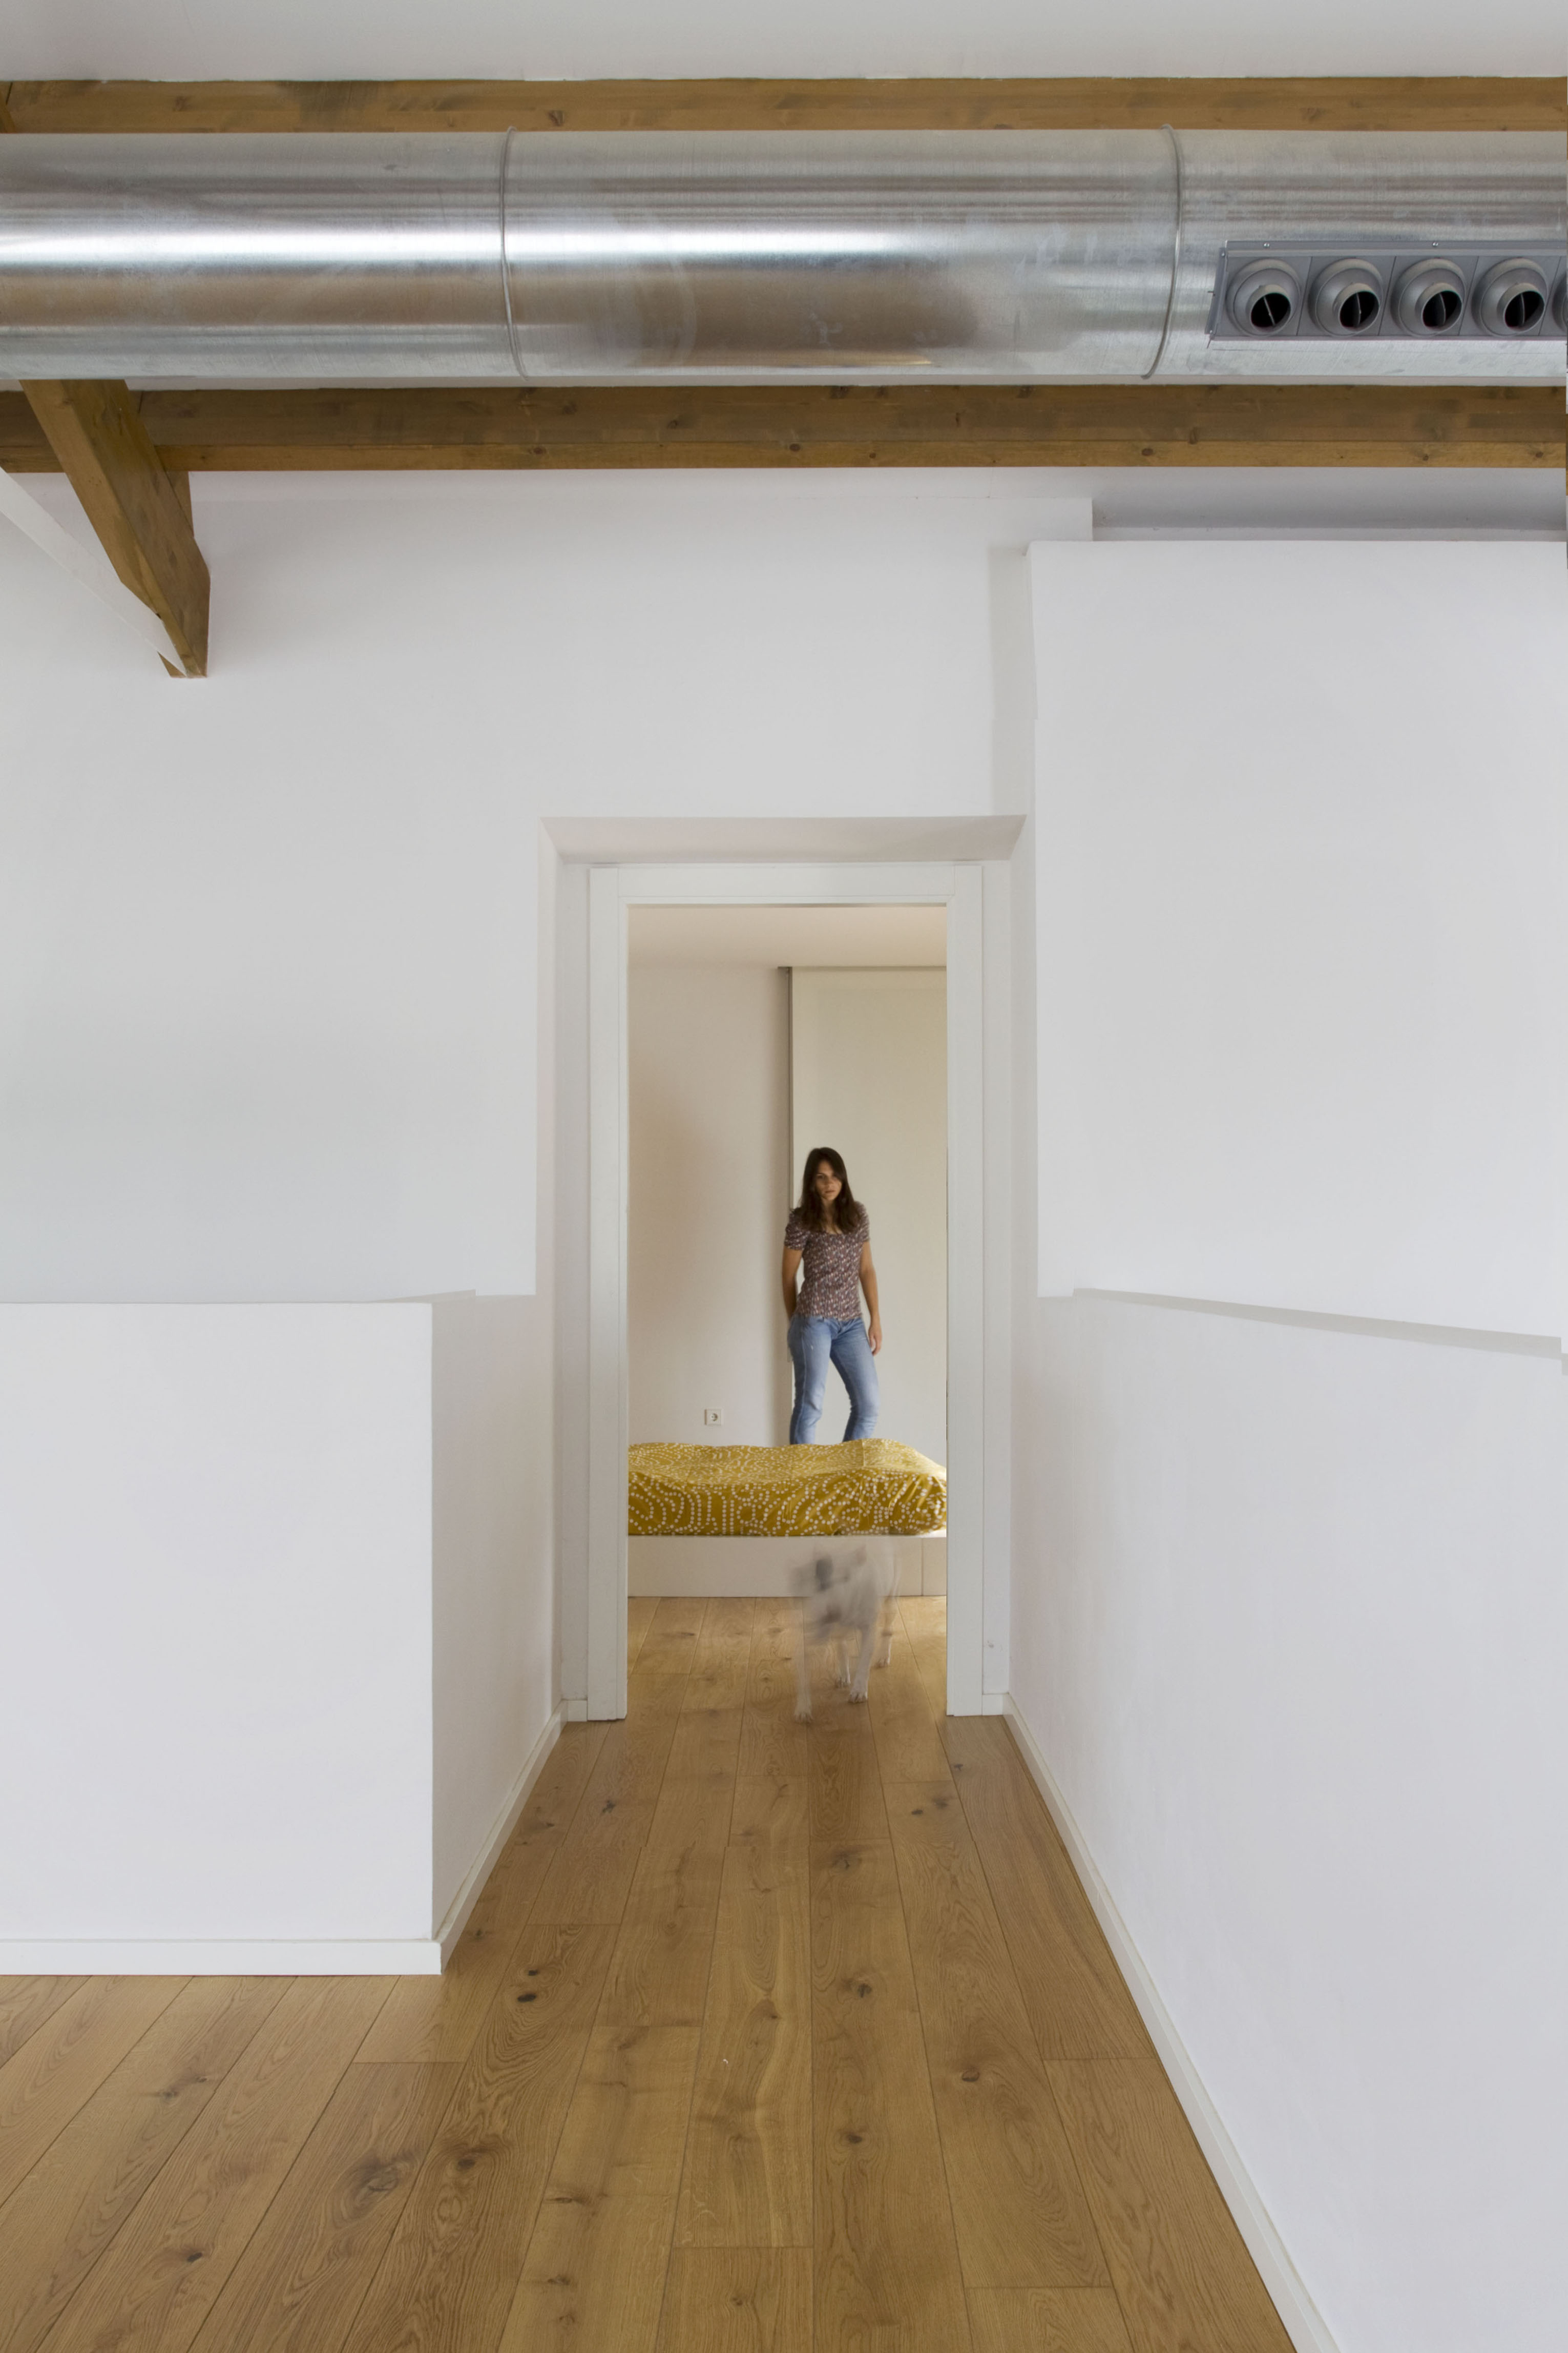 CŪ4 Arquitectura moderniza una casa de campo tradicional en Ontinyent, Valencia preservando la estructura original de vigas de madera.